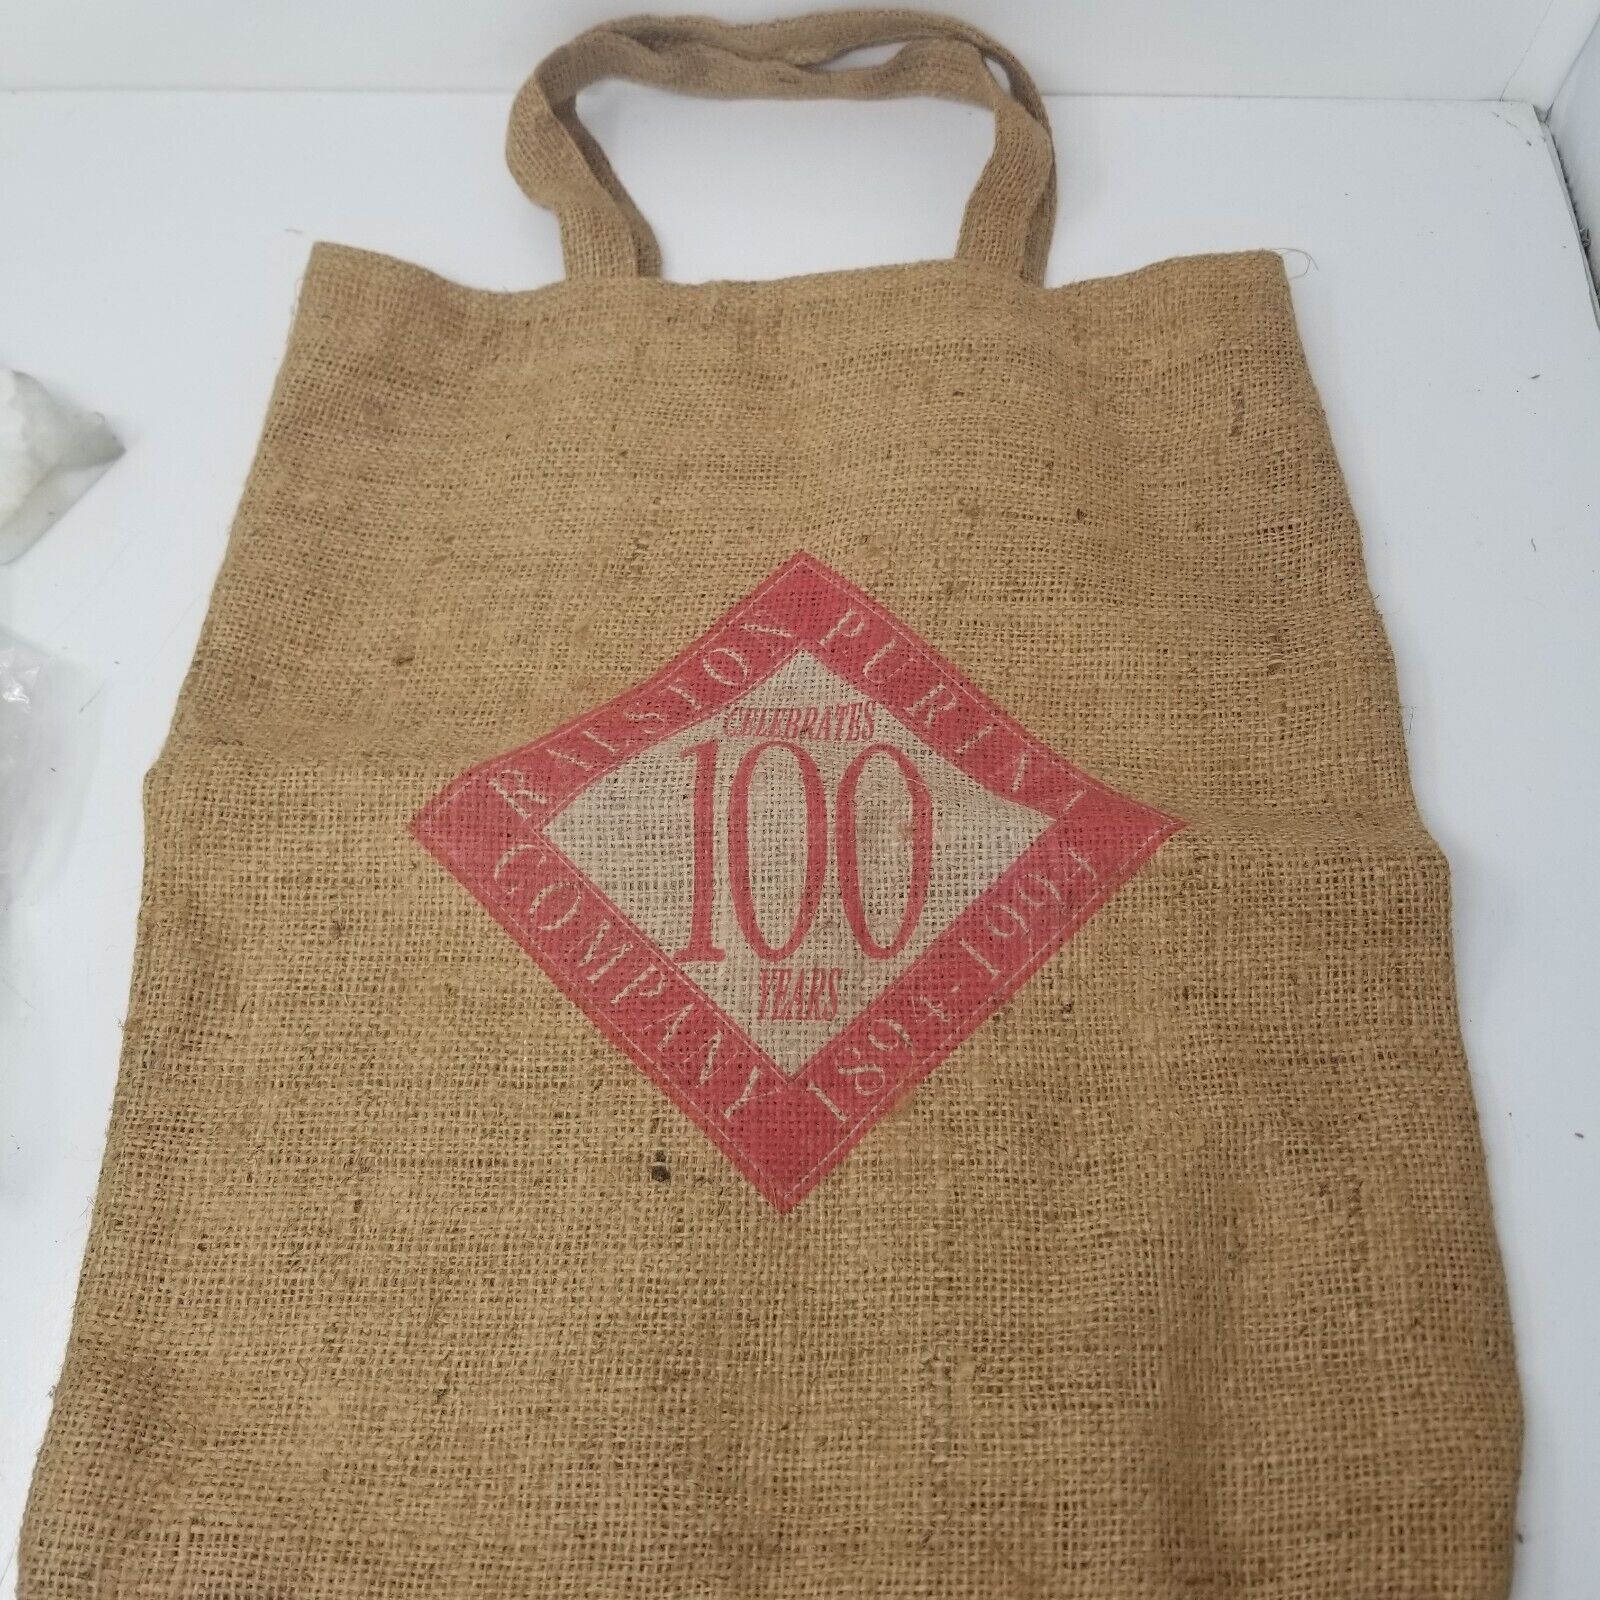 Ralston Purina 100th Anniversary Burlap Bag Large 1894-1994 Celebration